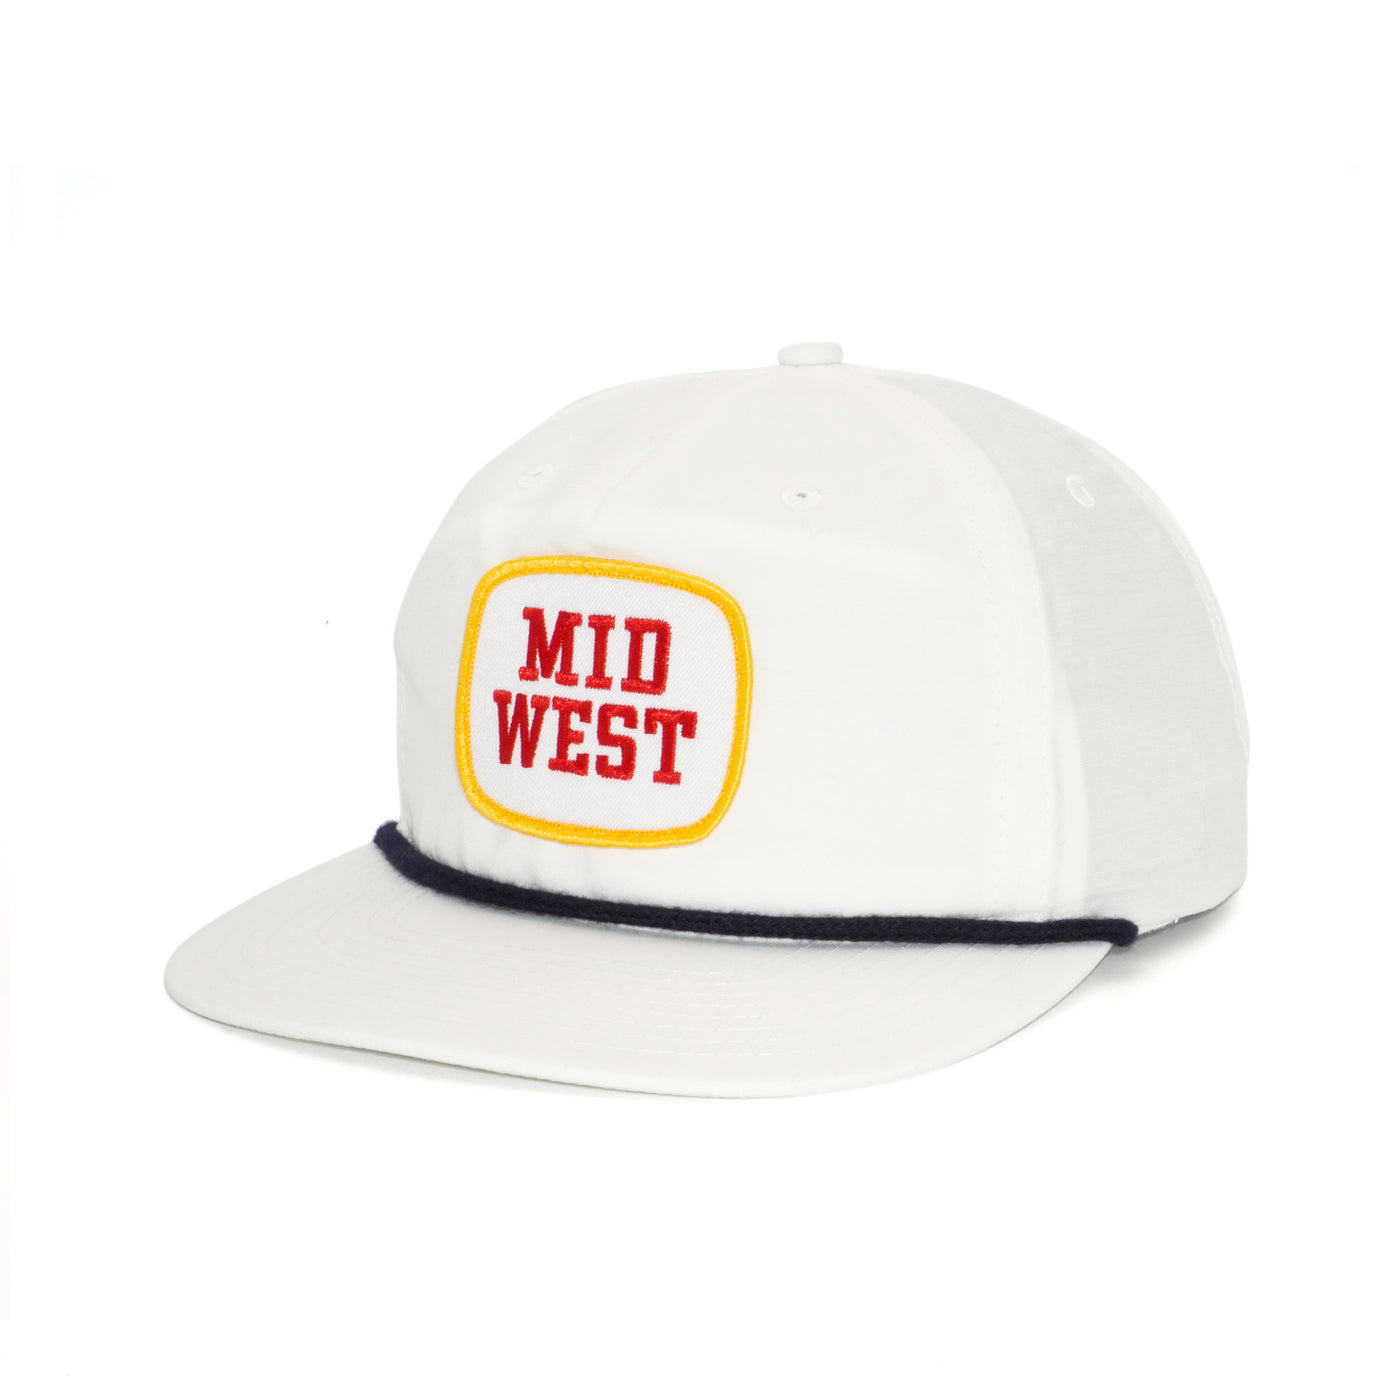 Go West Trucker Hat